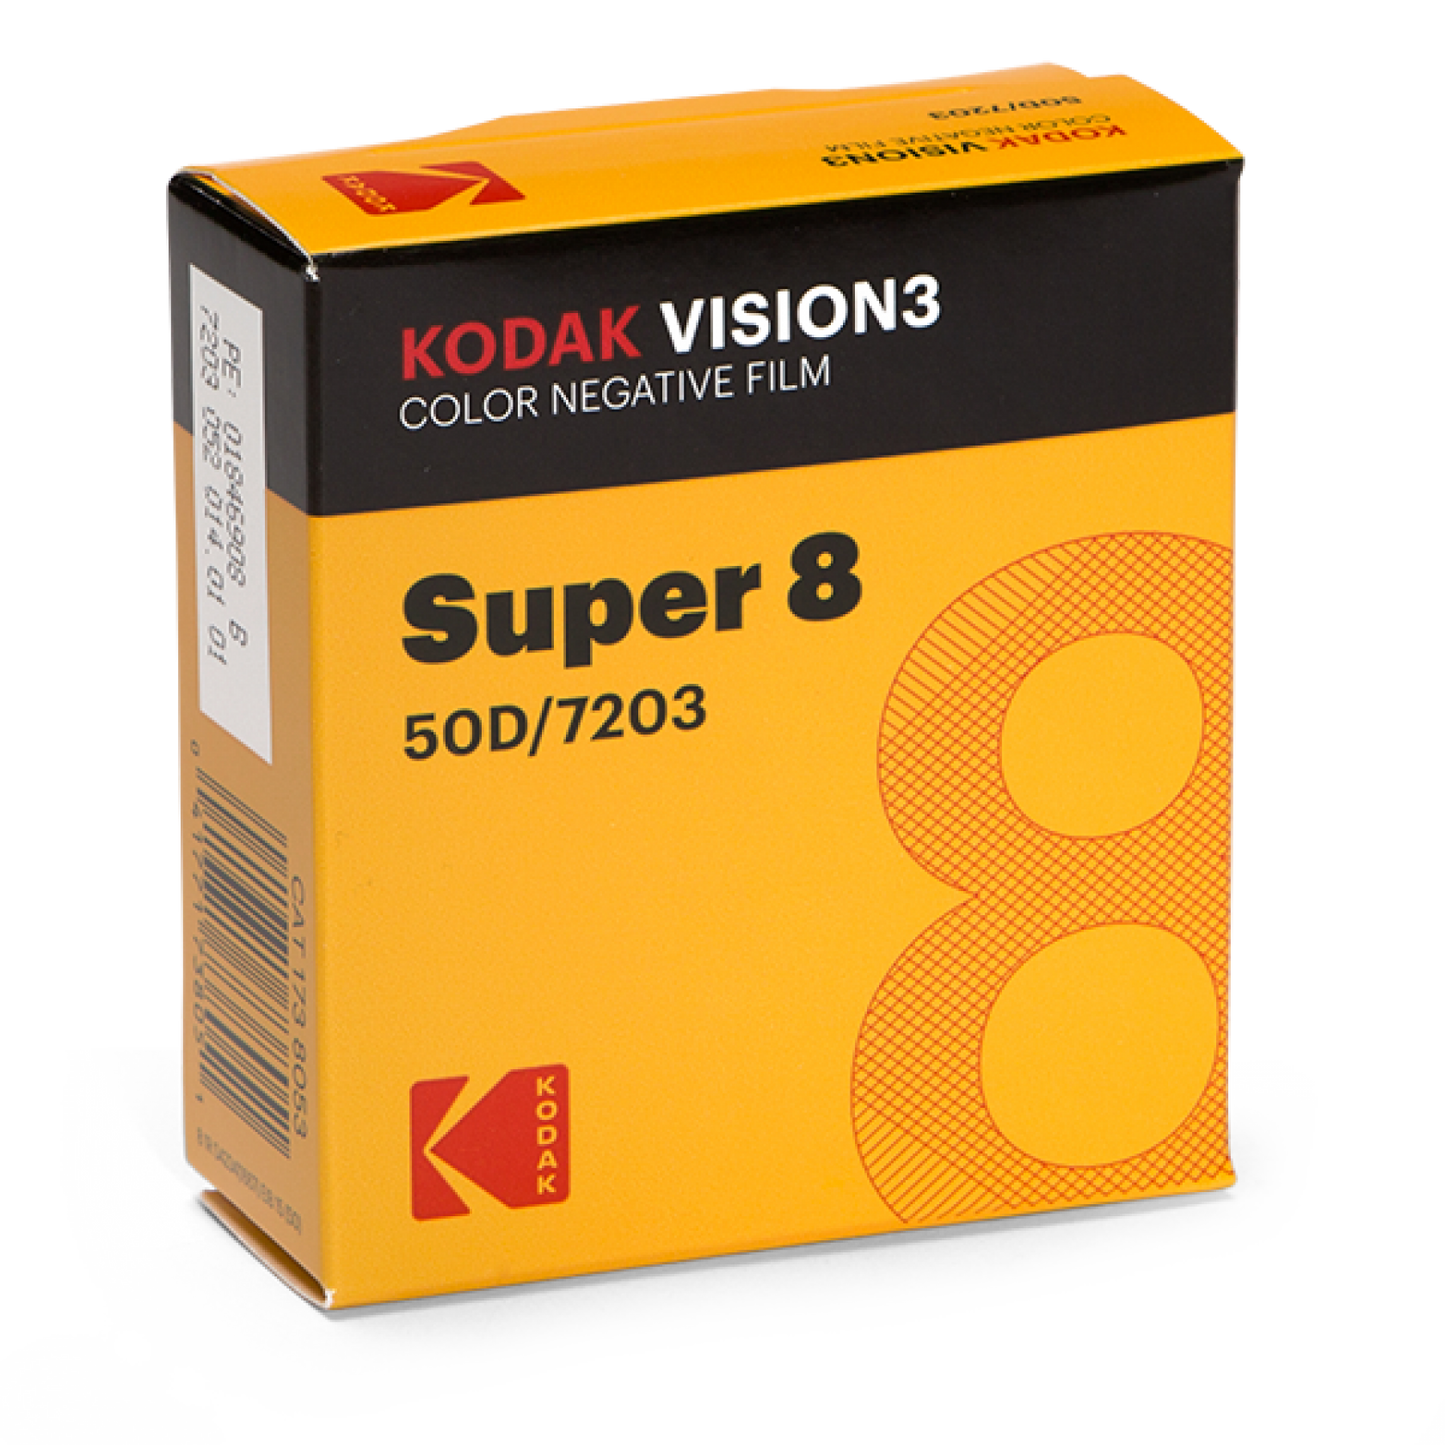 Film Kodak Vision3 super 8 - 50D/7203